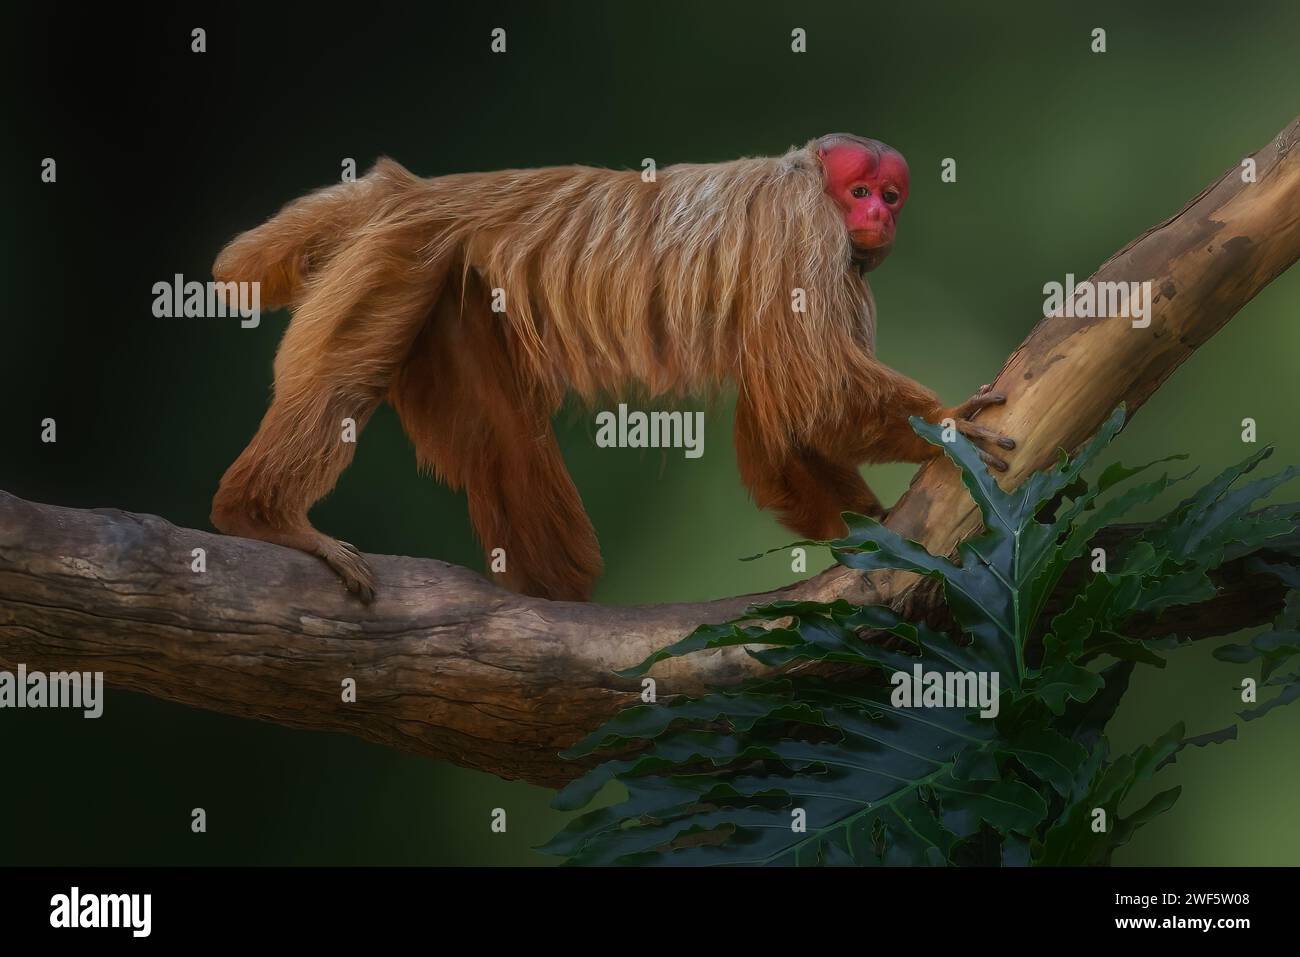 Red Uakari Monkey (Cacajao calvus rubicundus) Stock Photo